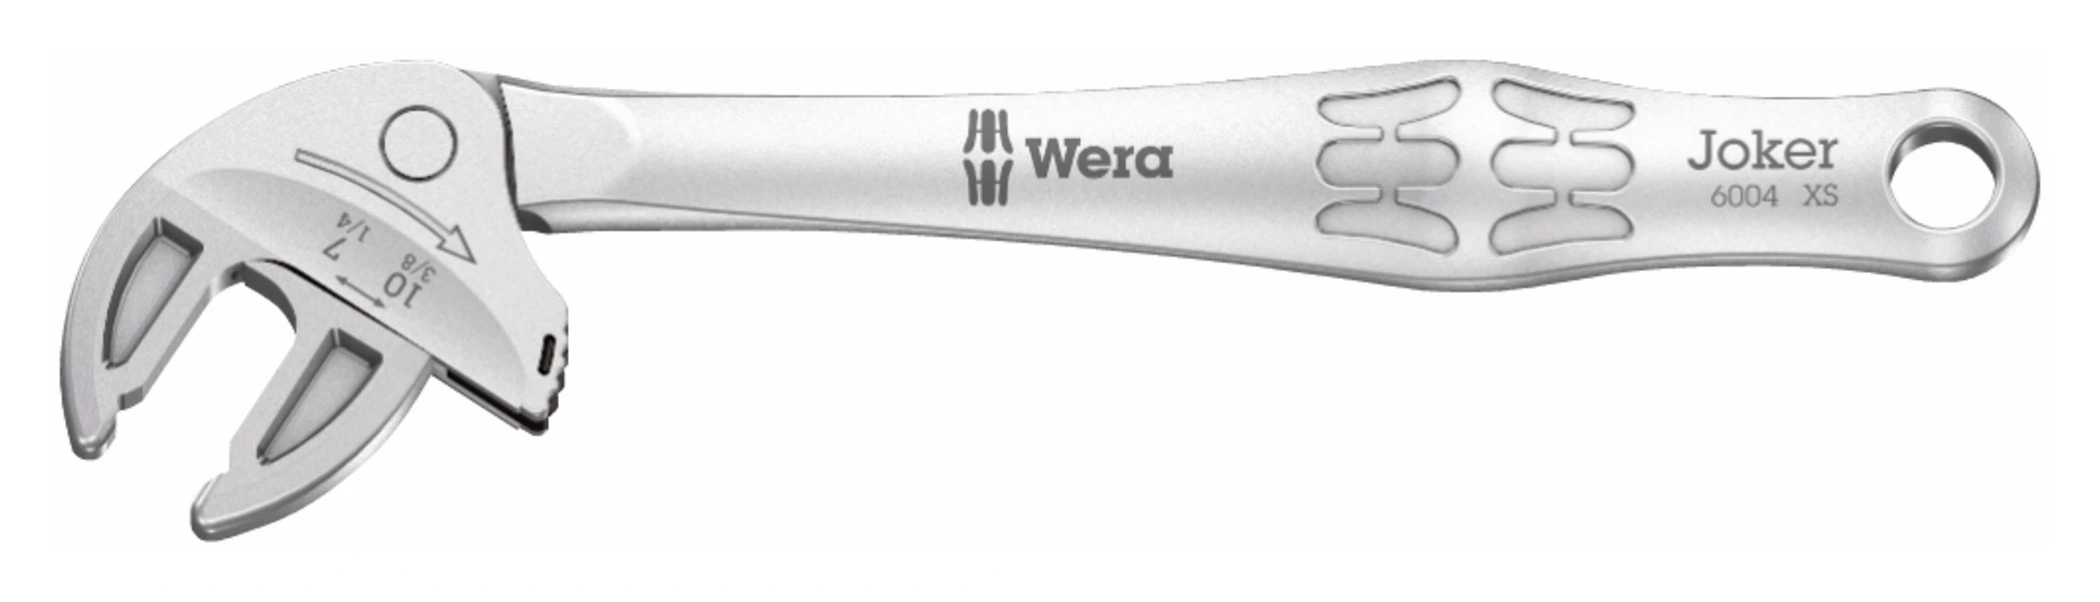 Wera Wera Joker open-end wrench self-adjusting, S-XXL